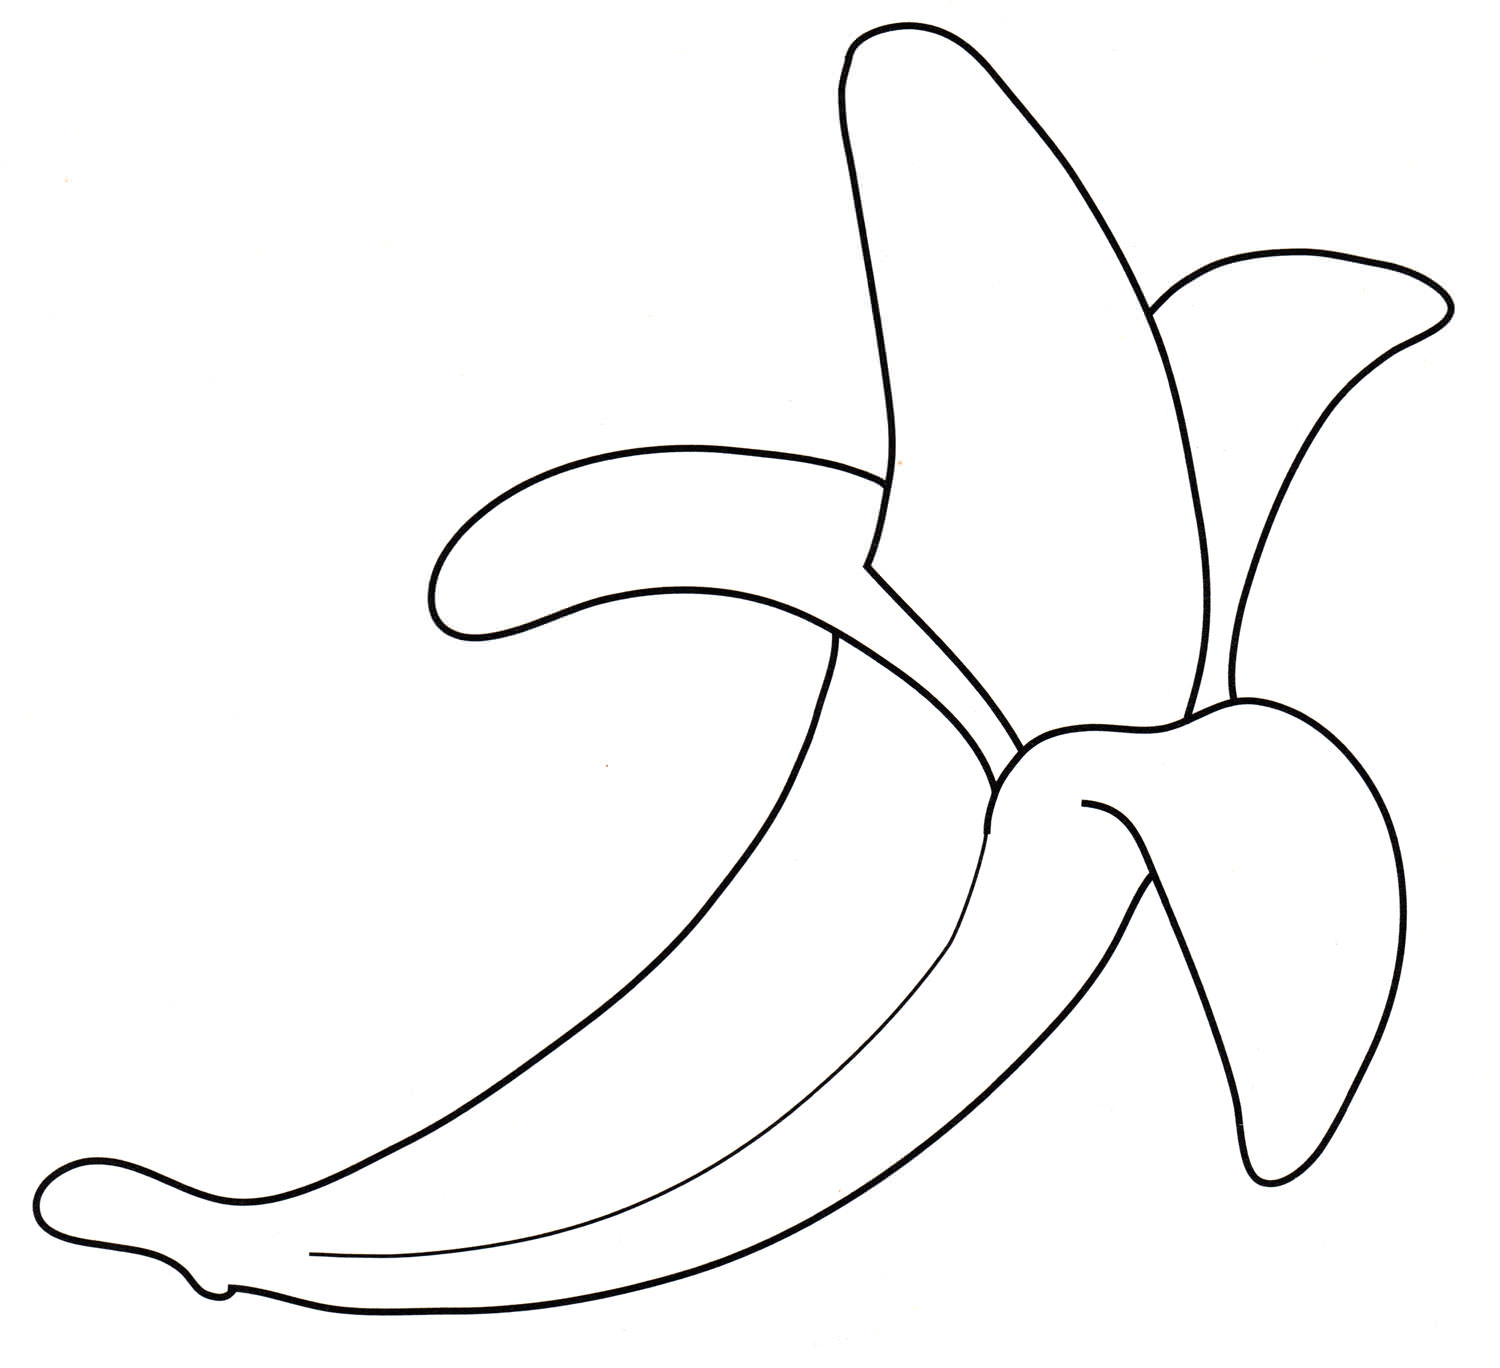 Розмальовка Очищений банан